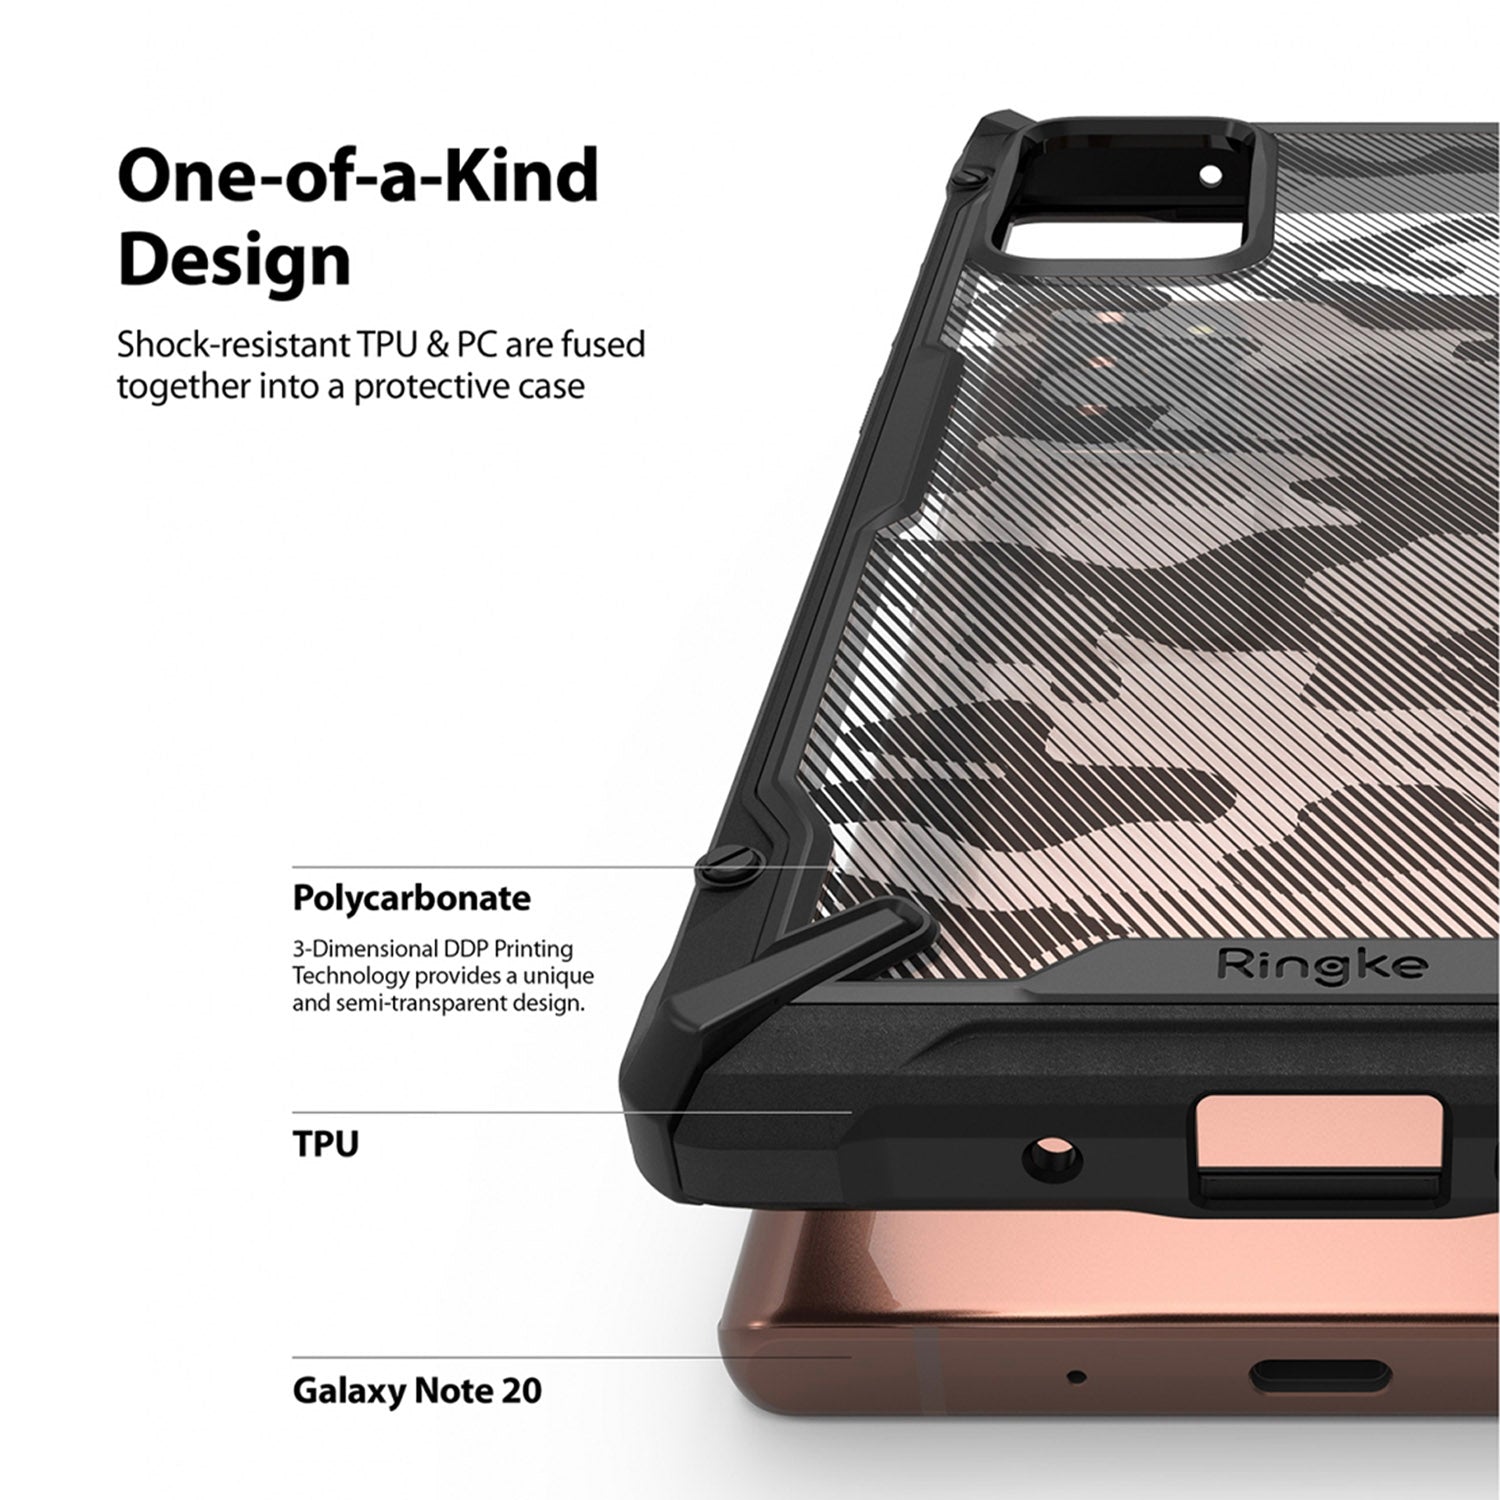 Ringke Samsung Galaxy Note 20 Case FUSION-X Camo Black